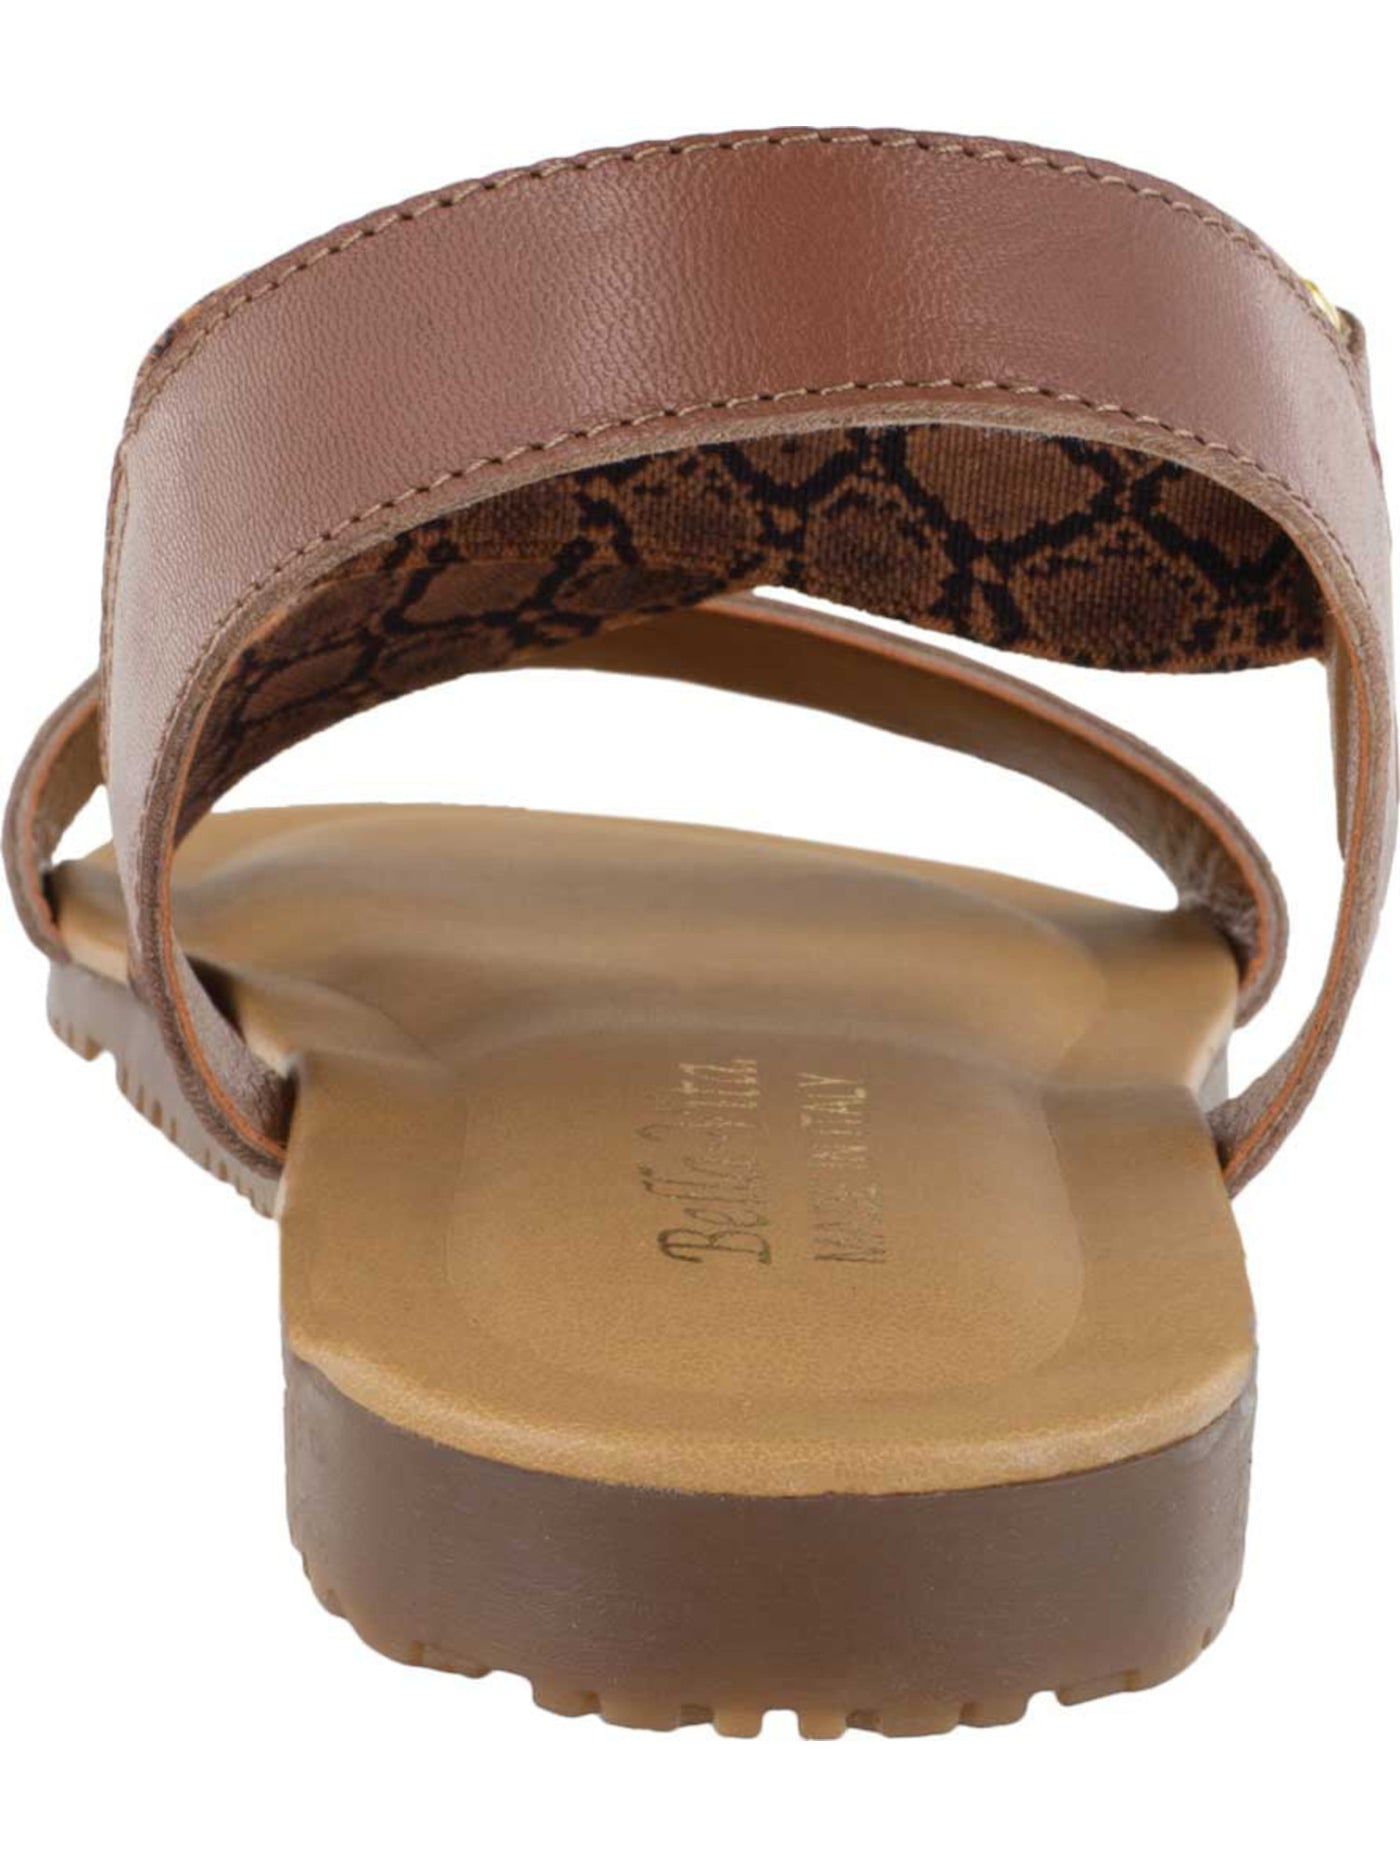 BELLA VITA Womens Brown Snakeskin 1/2 Heel Padded Stretch Nev-italy Round Toe Wedge Slip On Leather Slingback Sandal 8 WW